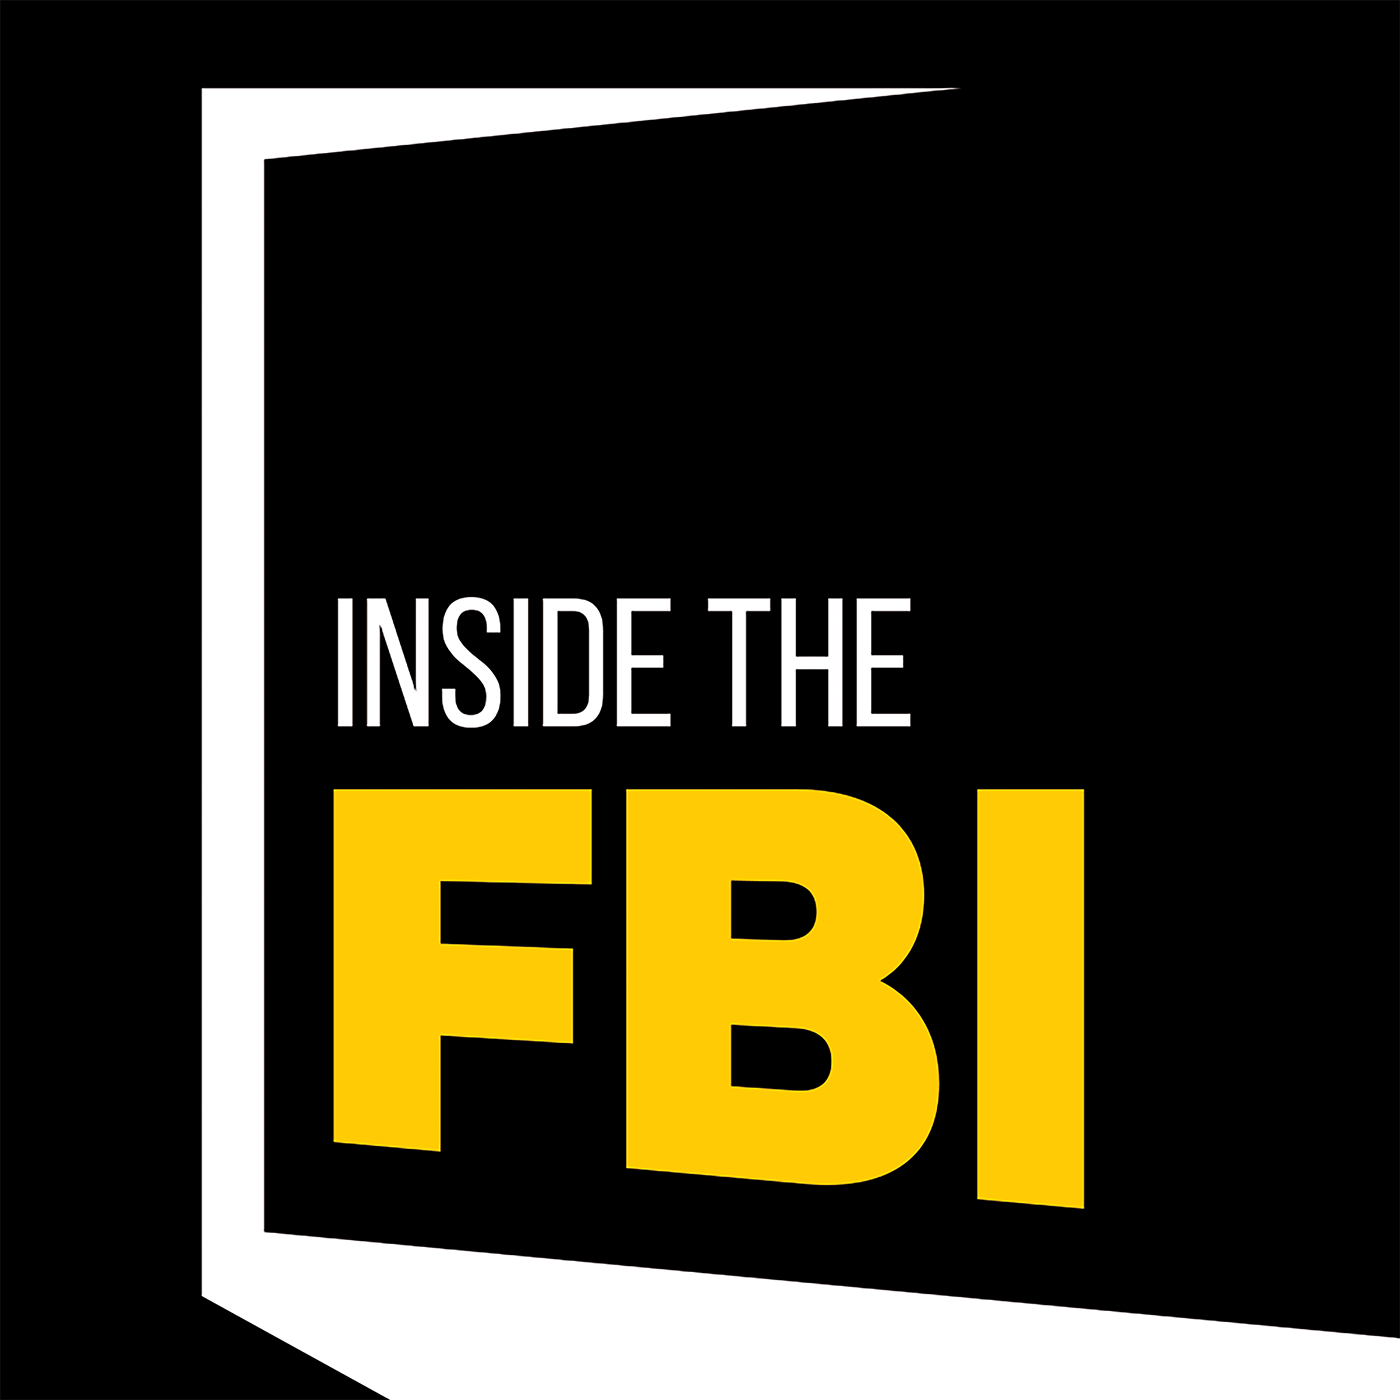 Square logo image for the Inside the FBI podcast